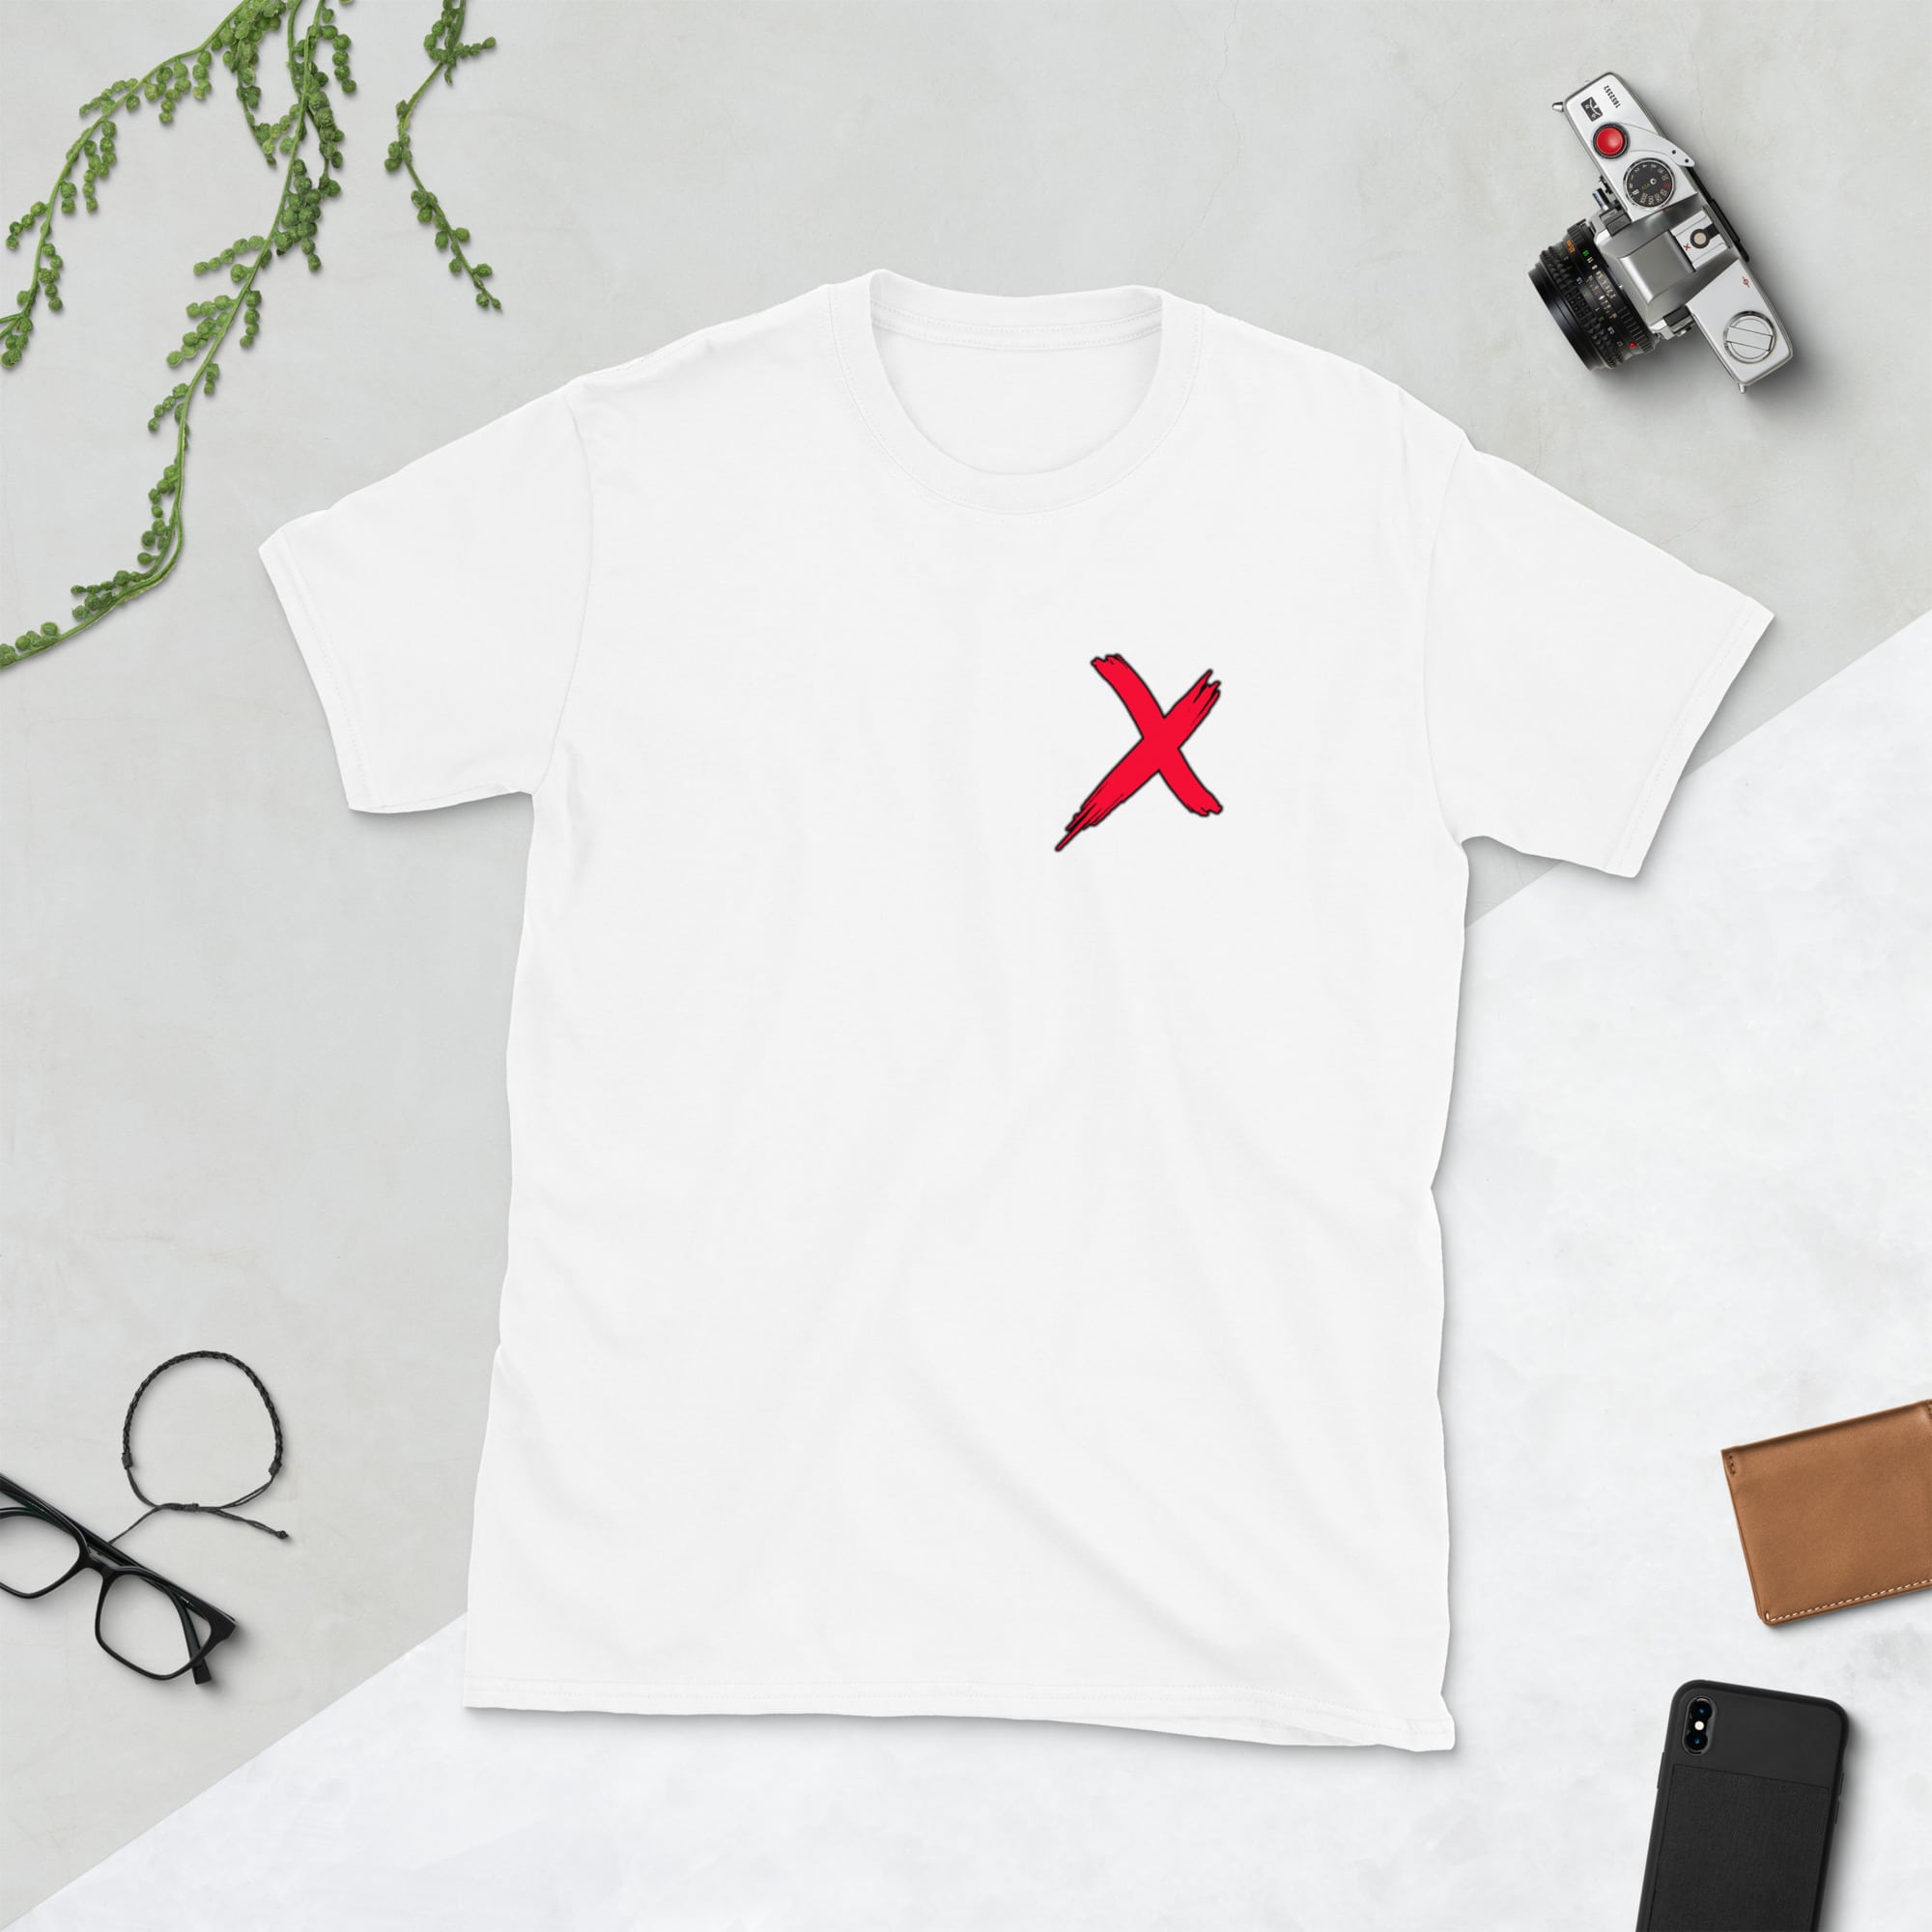 unisex-basic-softstyle-t-shirt-white-front-6399460524d22.jpg